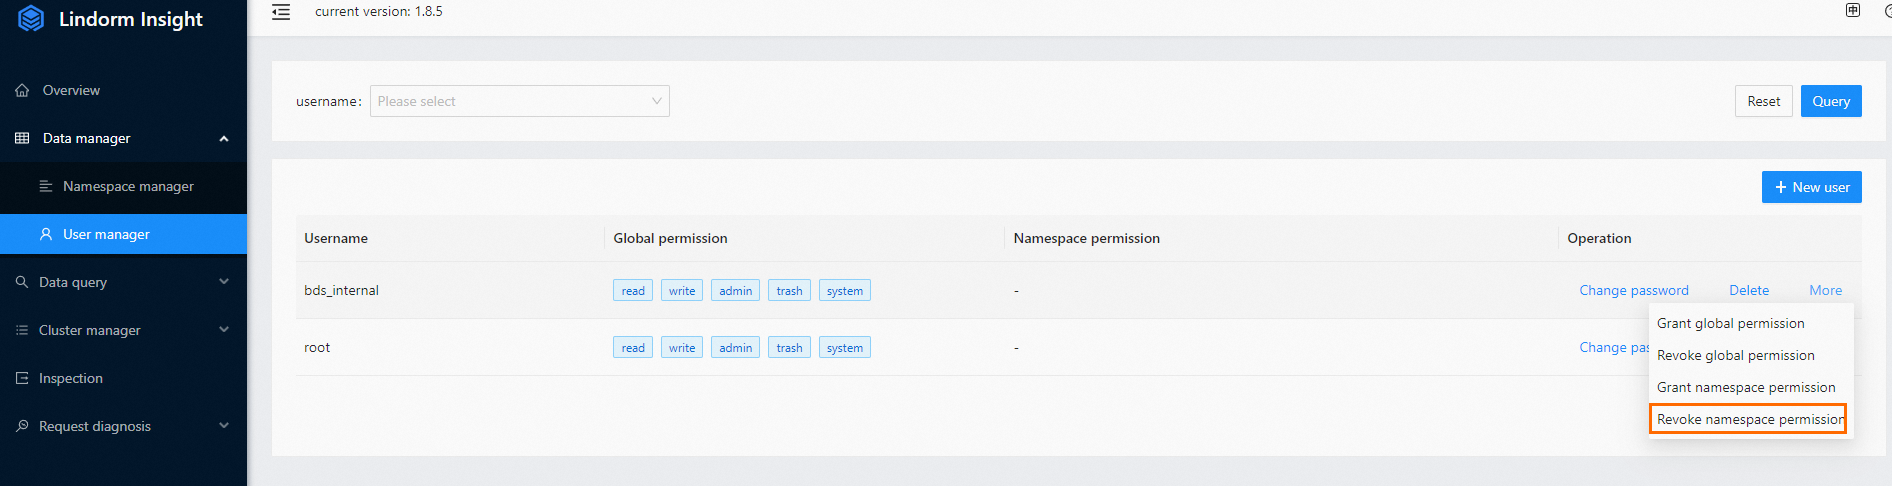 Revoke permissions on a namespace